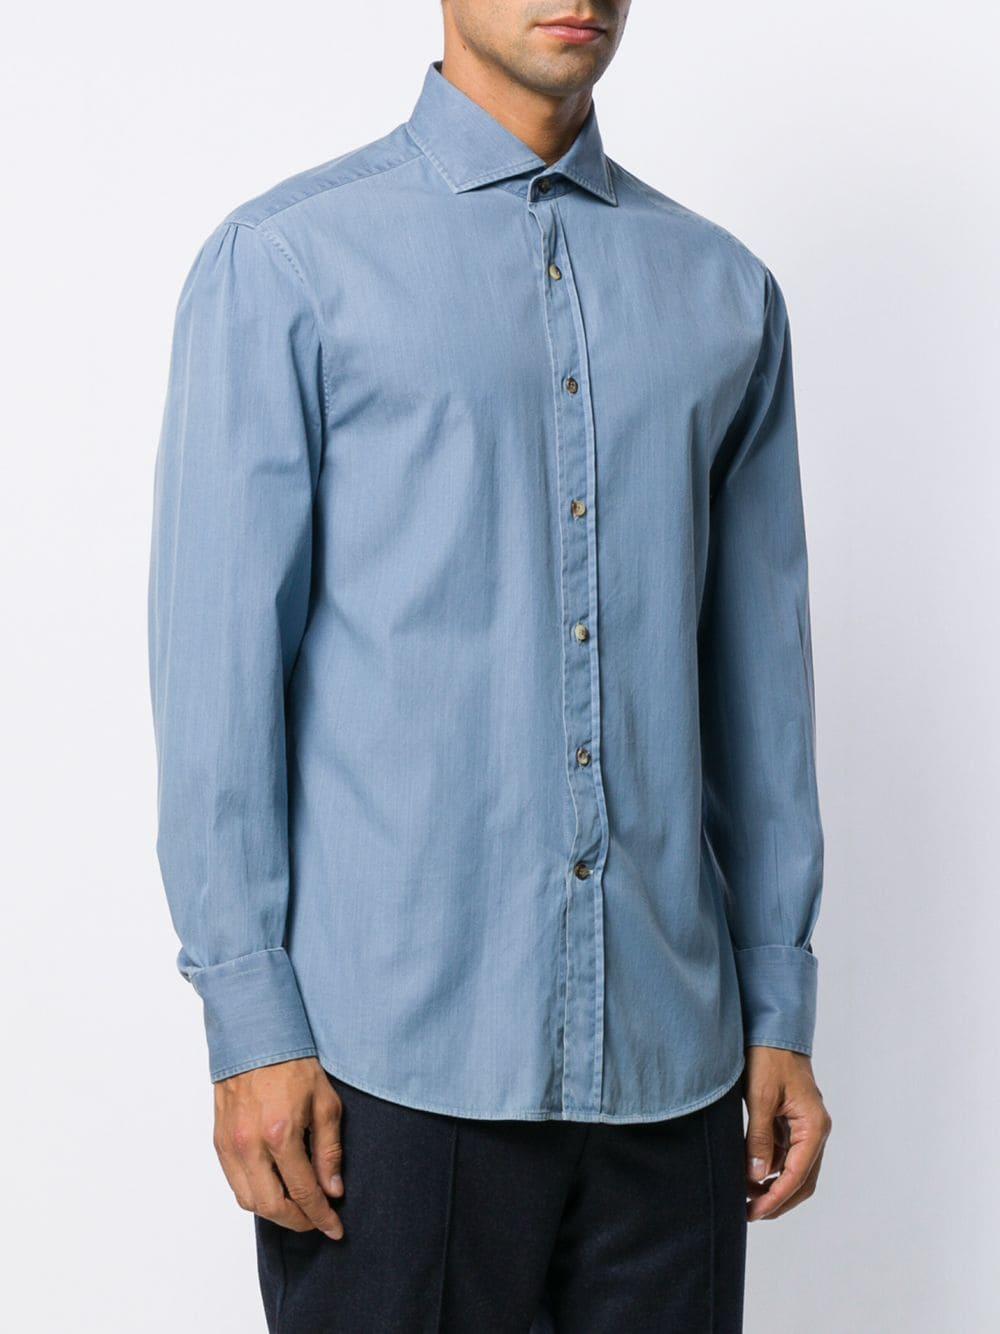 Brunello Cucinelli Denim Fitted Shirt in Blue for Men - Lyst